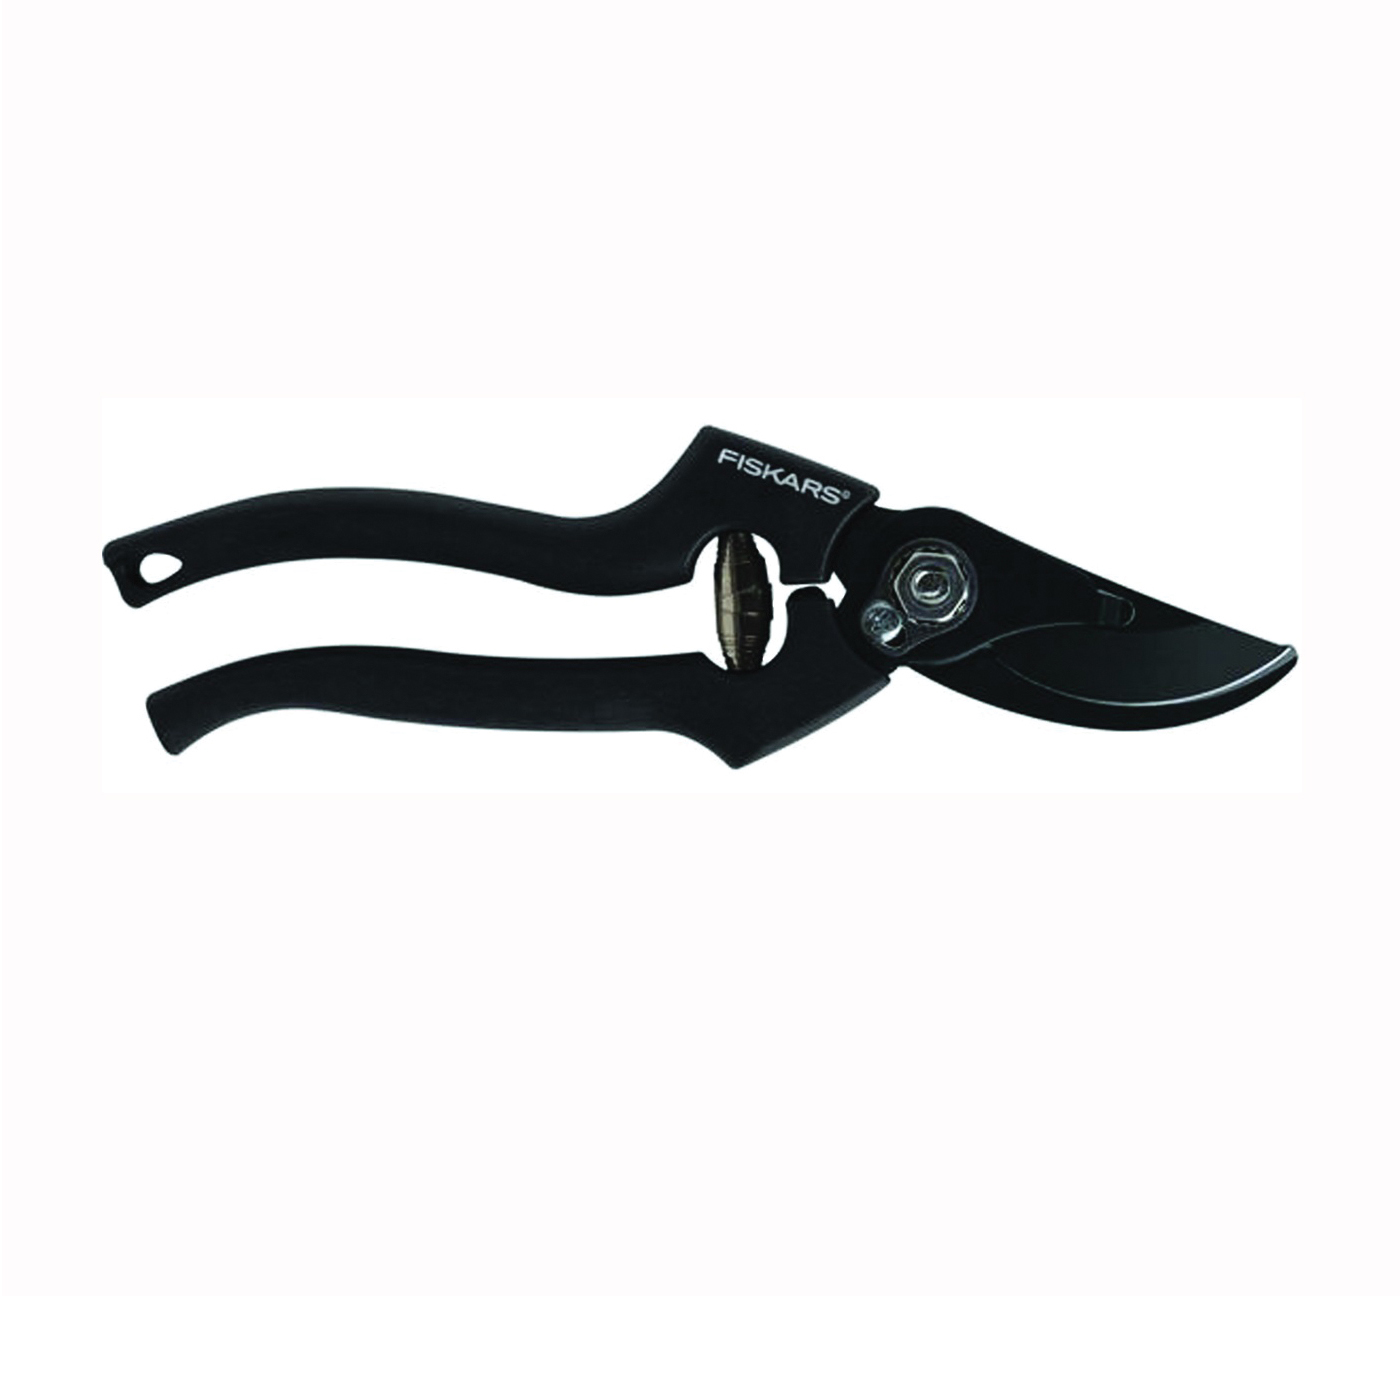 91246935 Pruner, 1 in Cutting Capacity, Steel Blade, Bypass Blade, Ergonomic Handle